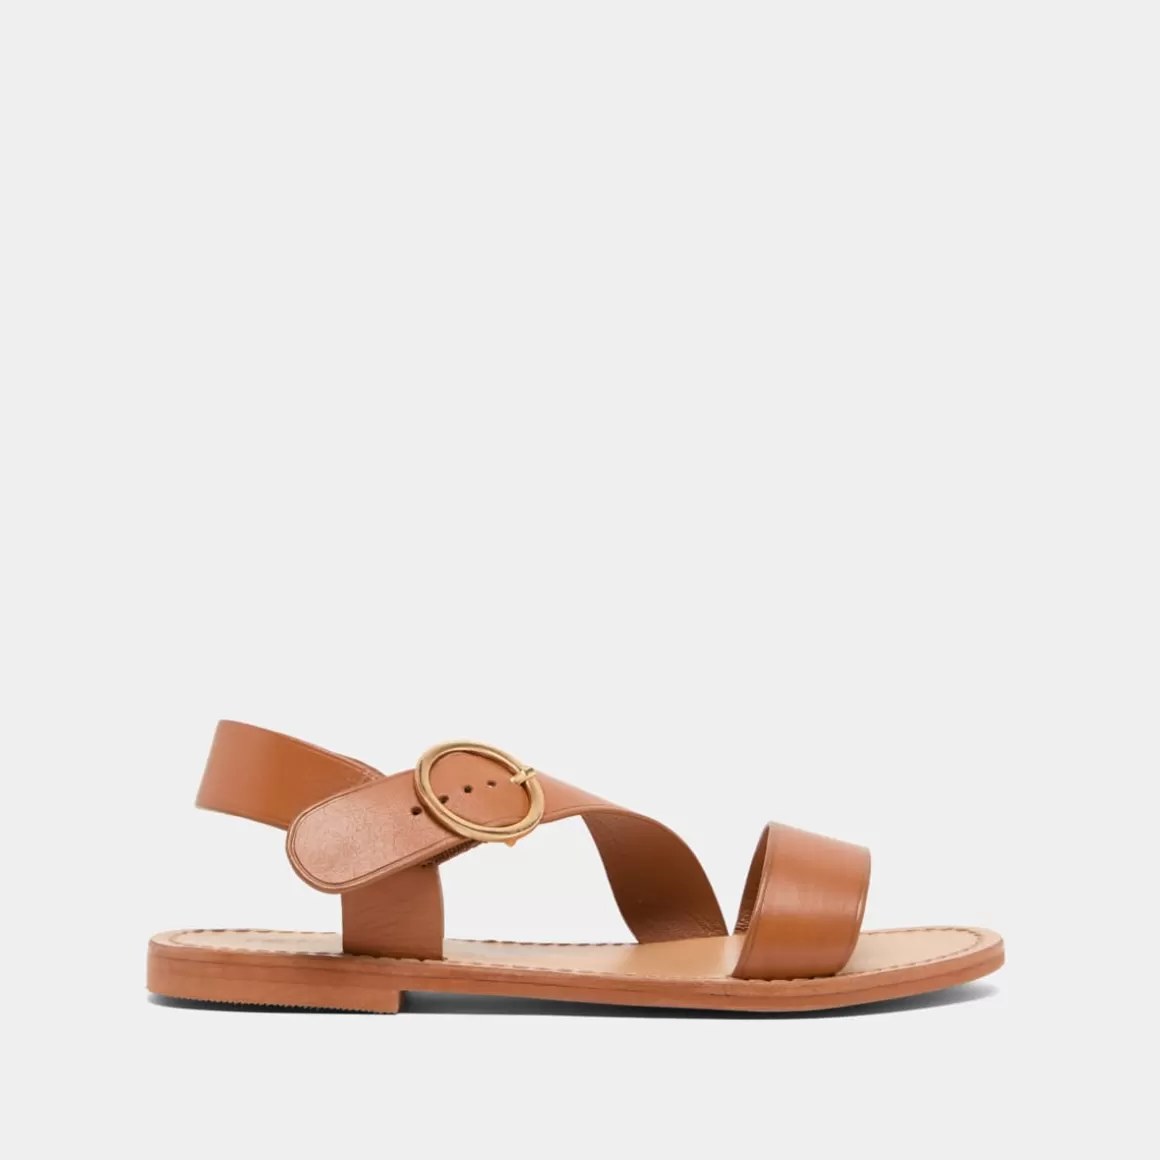 Asymmetrical sandals<Jonak Clearance